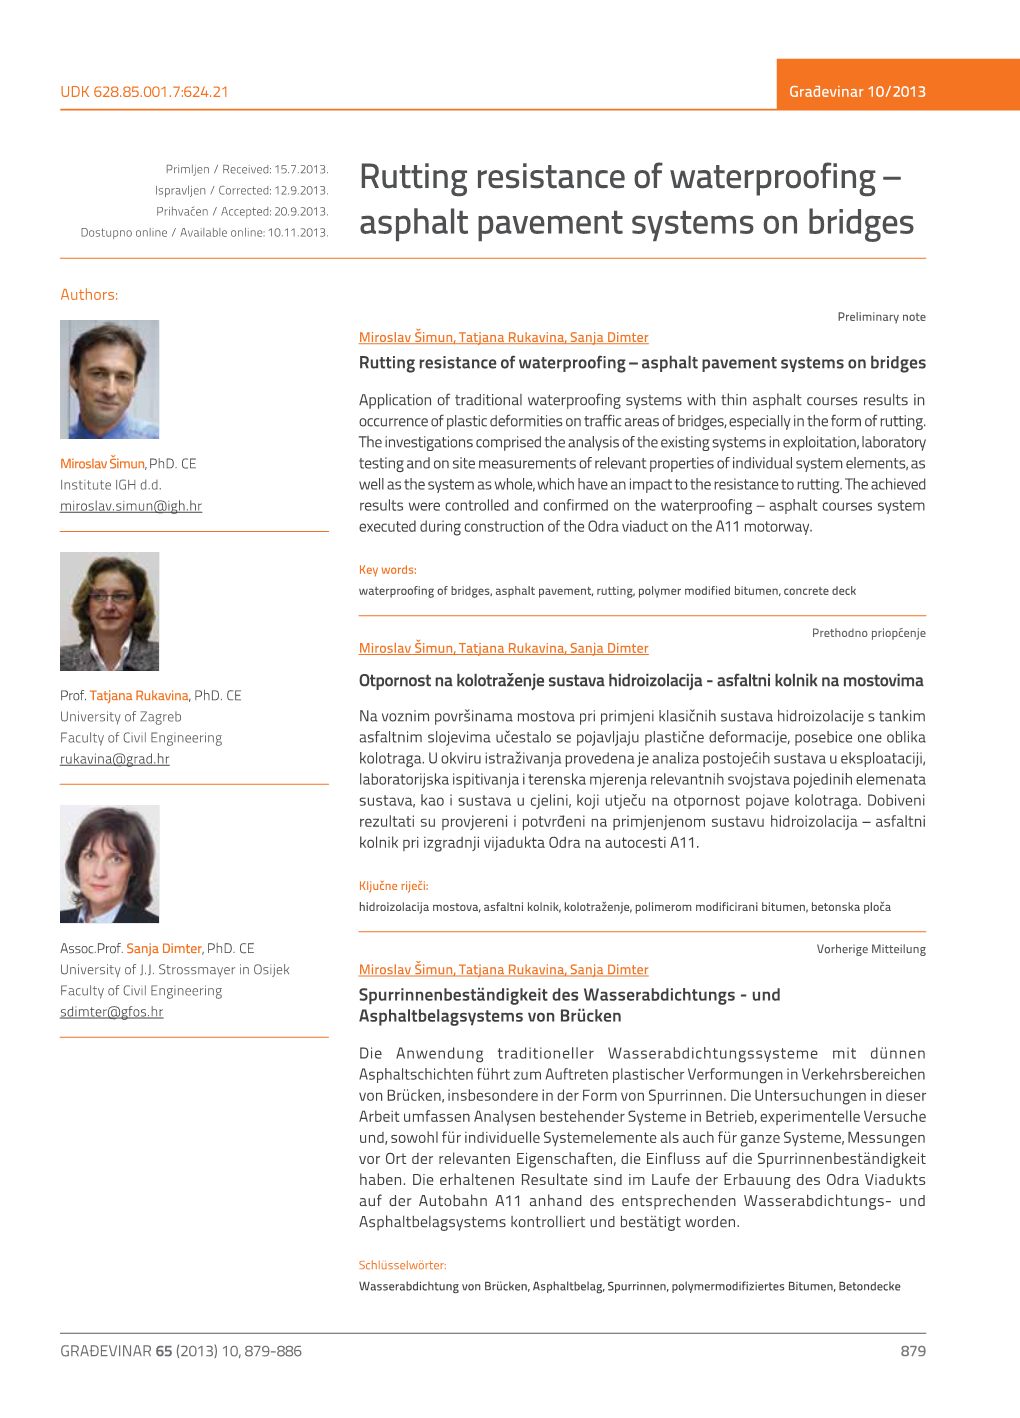 Rutting Resistance of Waterproofing – Asphalt Pavement Systems on Bridges